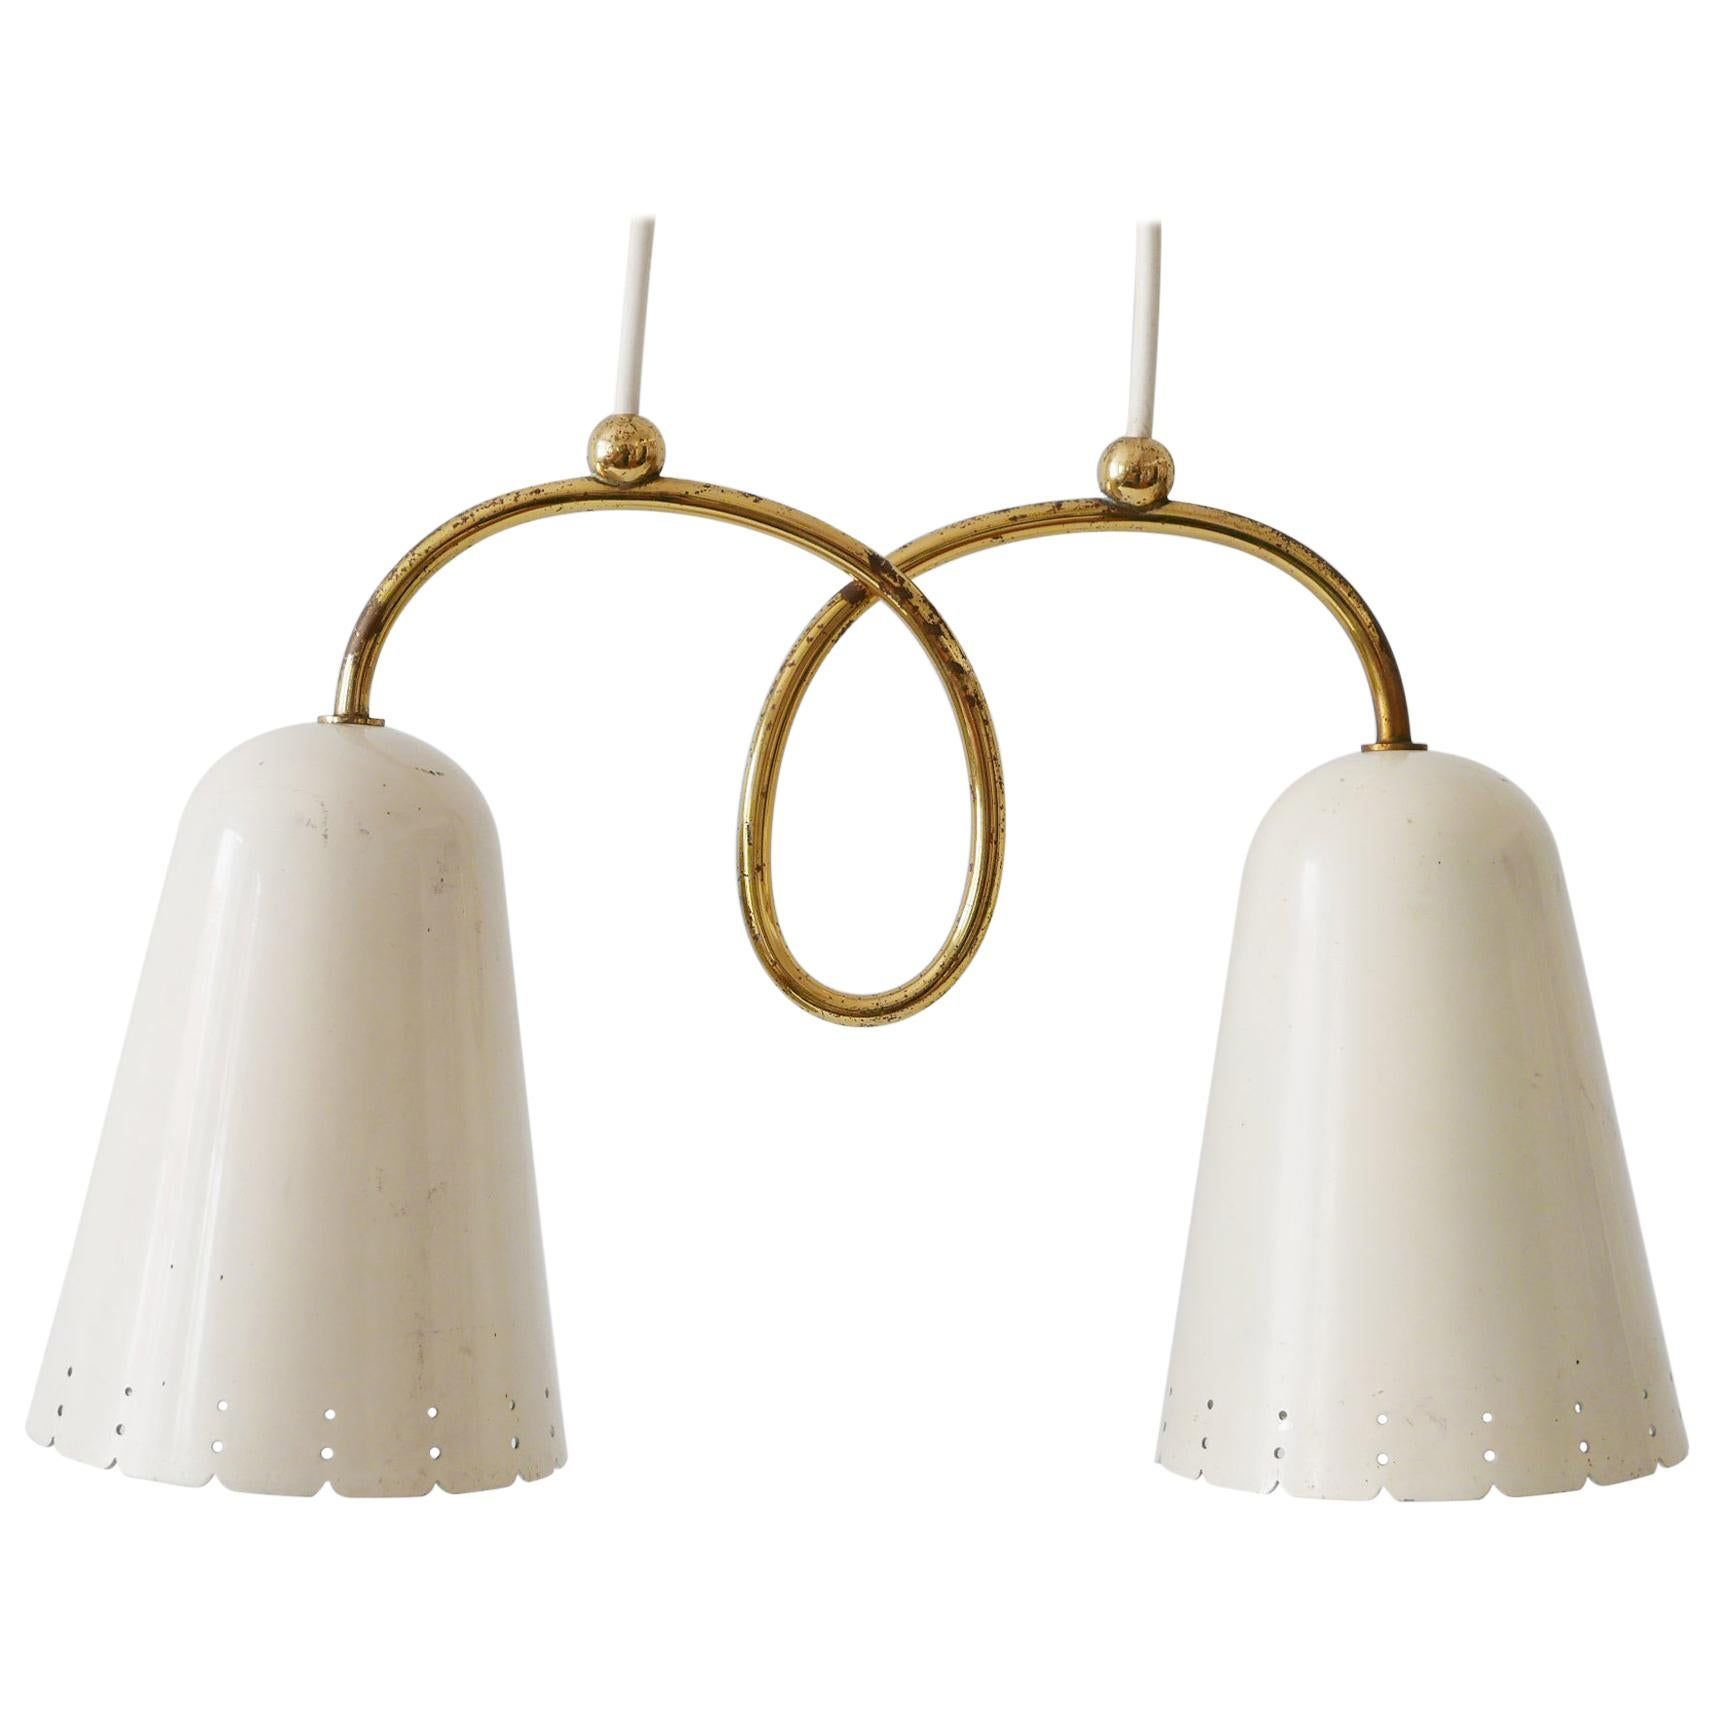 Rare Mid-Century Modern Double Head Pendant Lamp or Hanging Light 1950s, Germany | 1stDibs